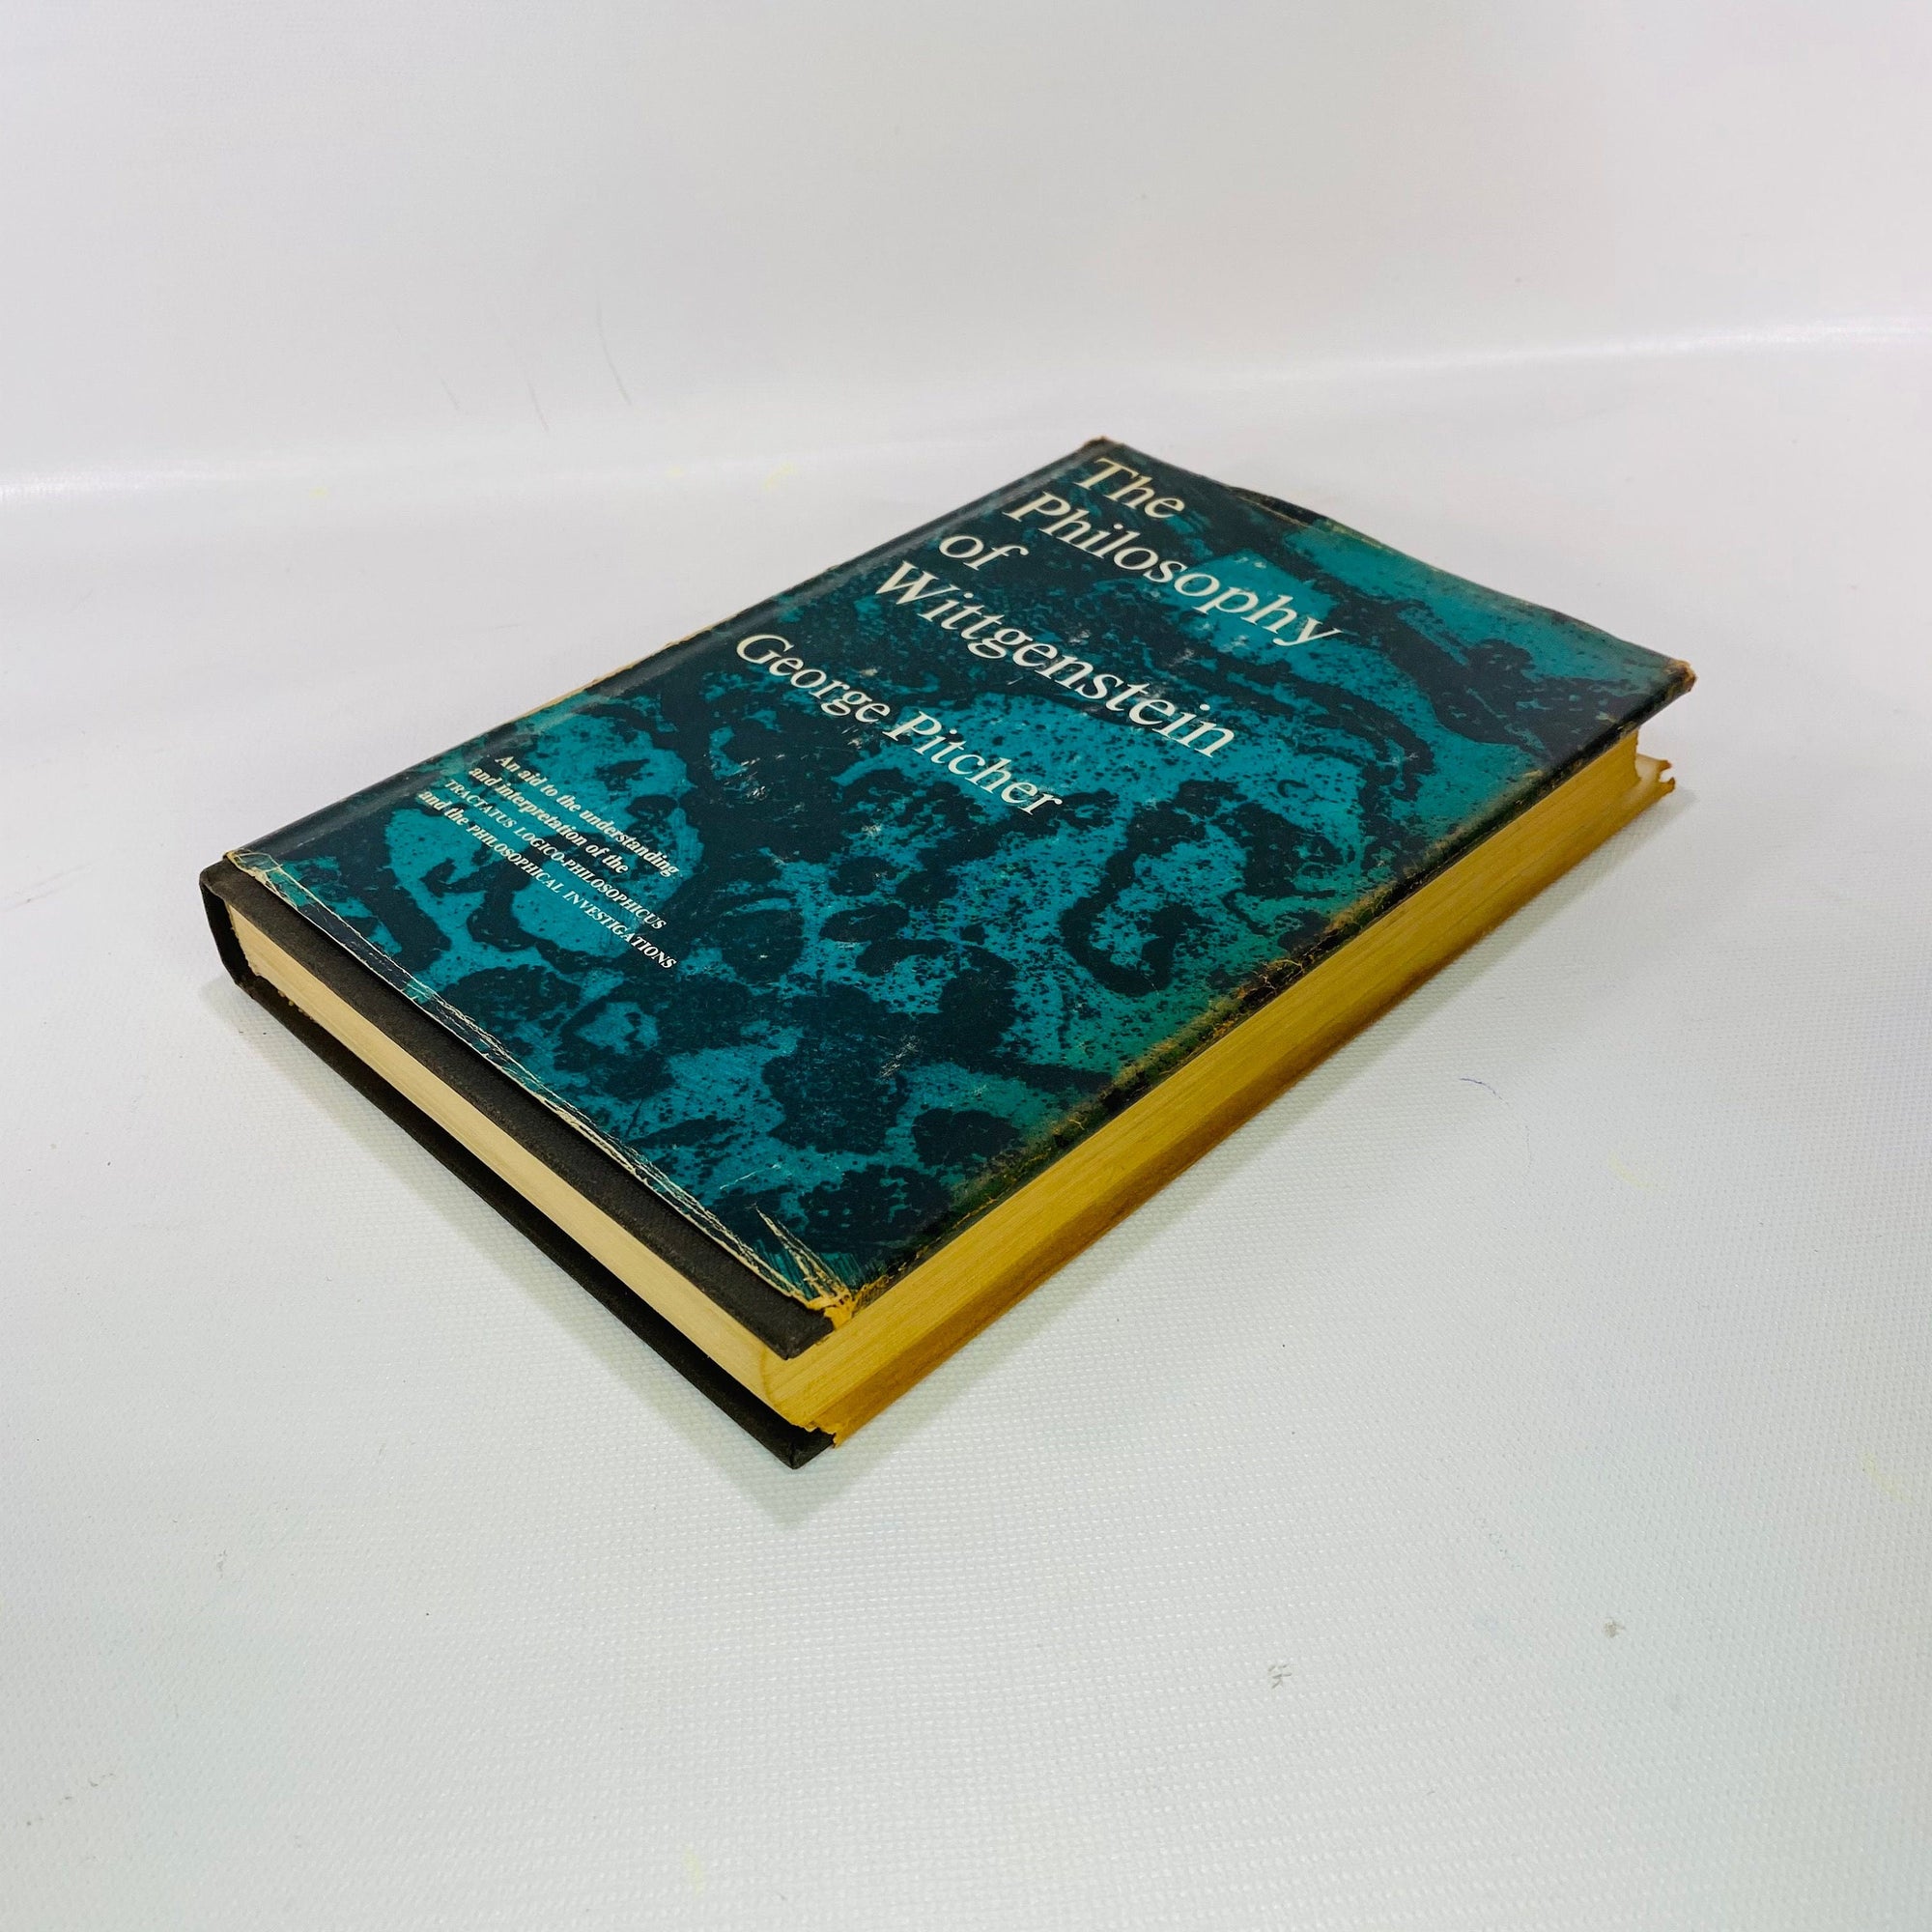 The of Philosophy Wittgenstein by George Pitcher 1964 Vintage Book